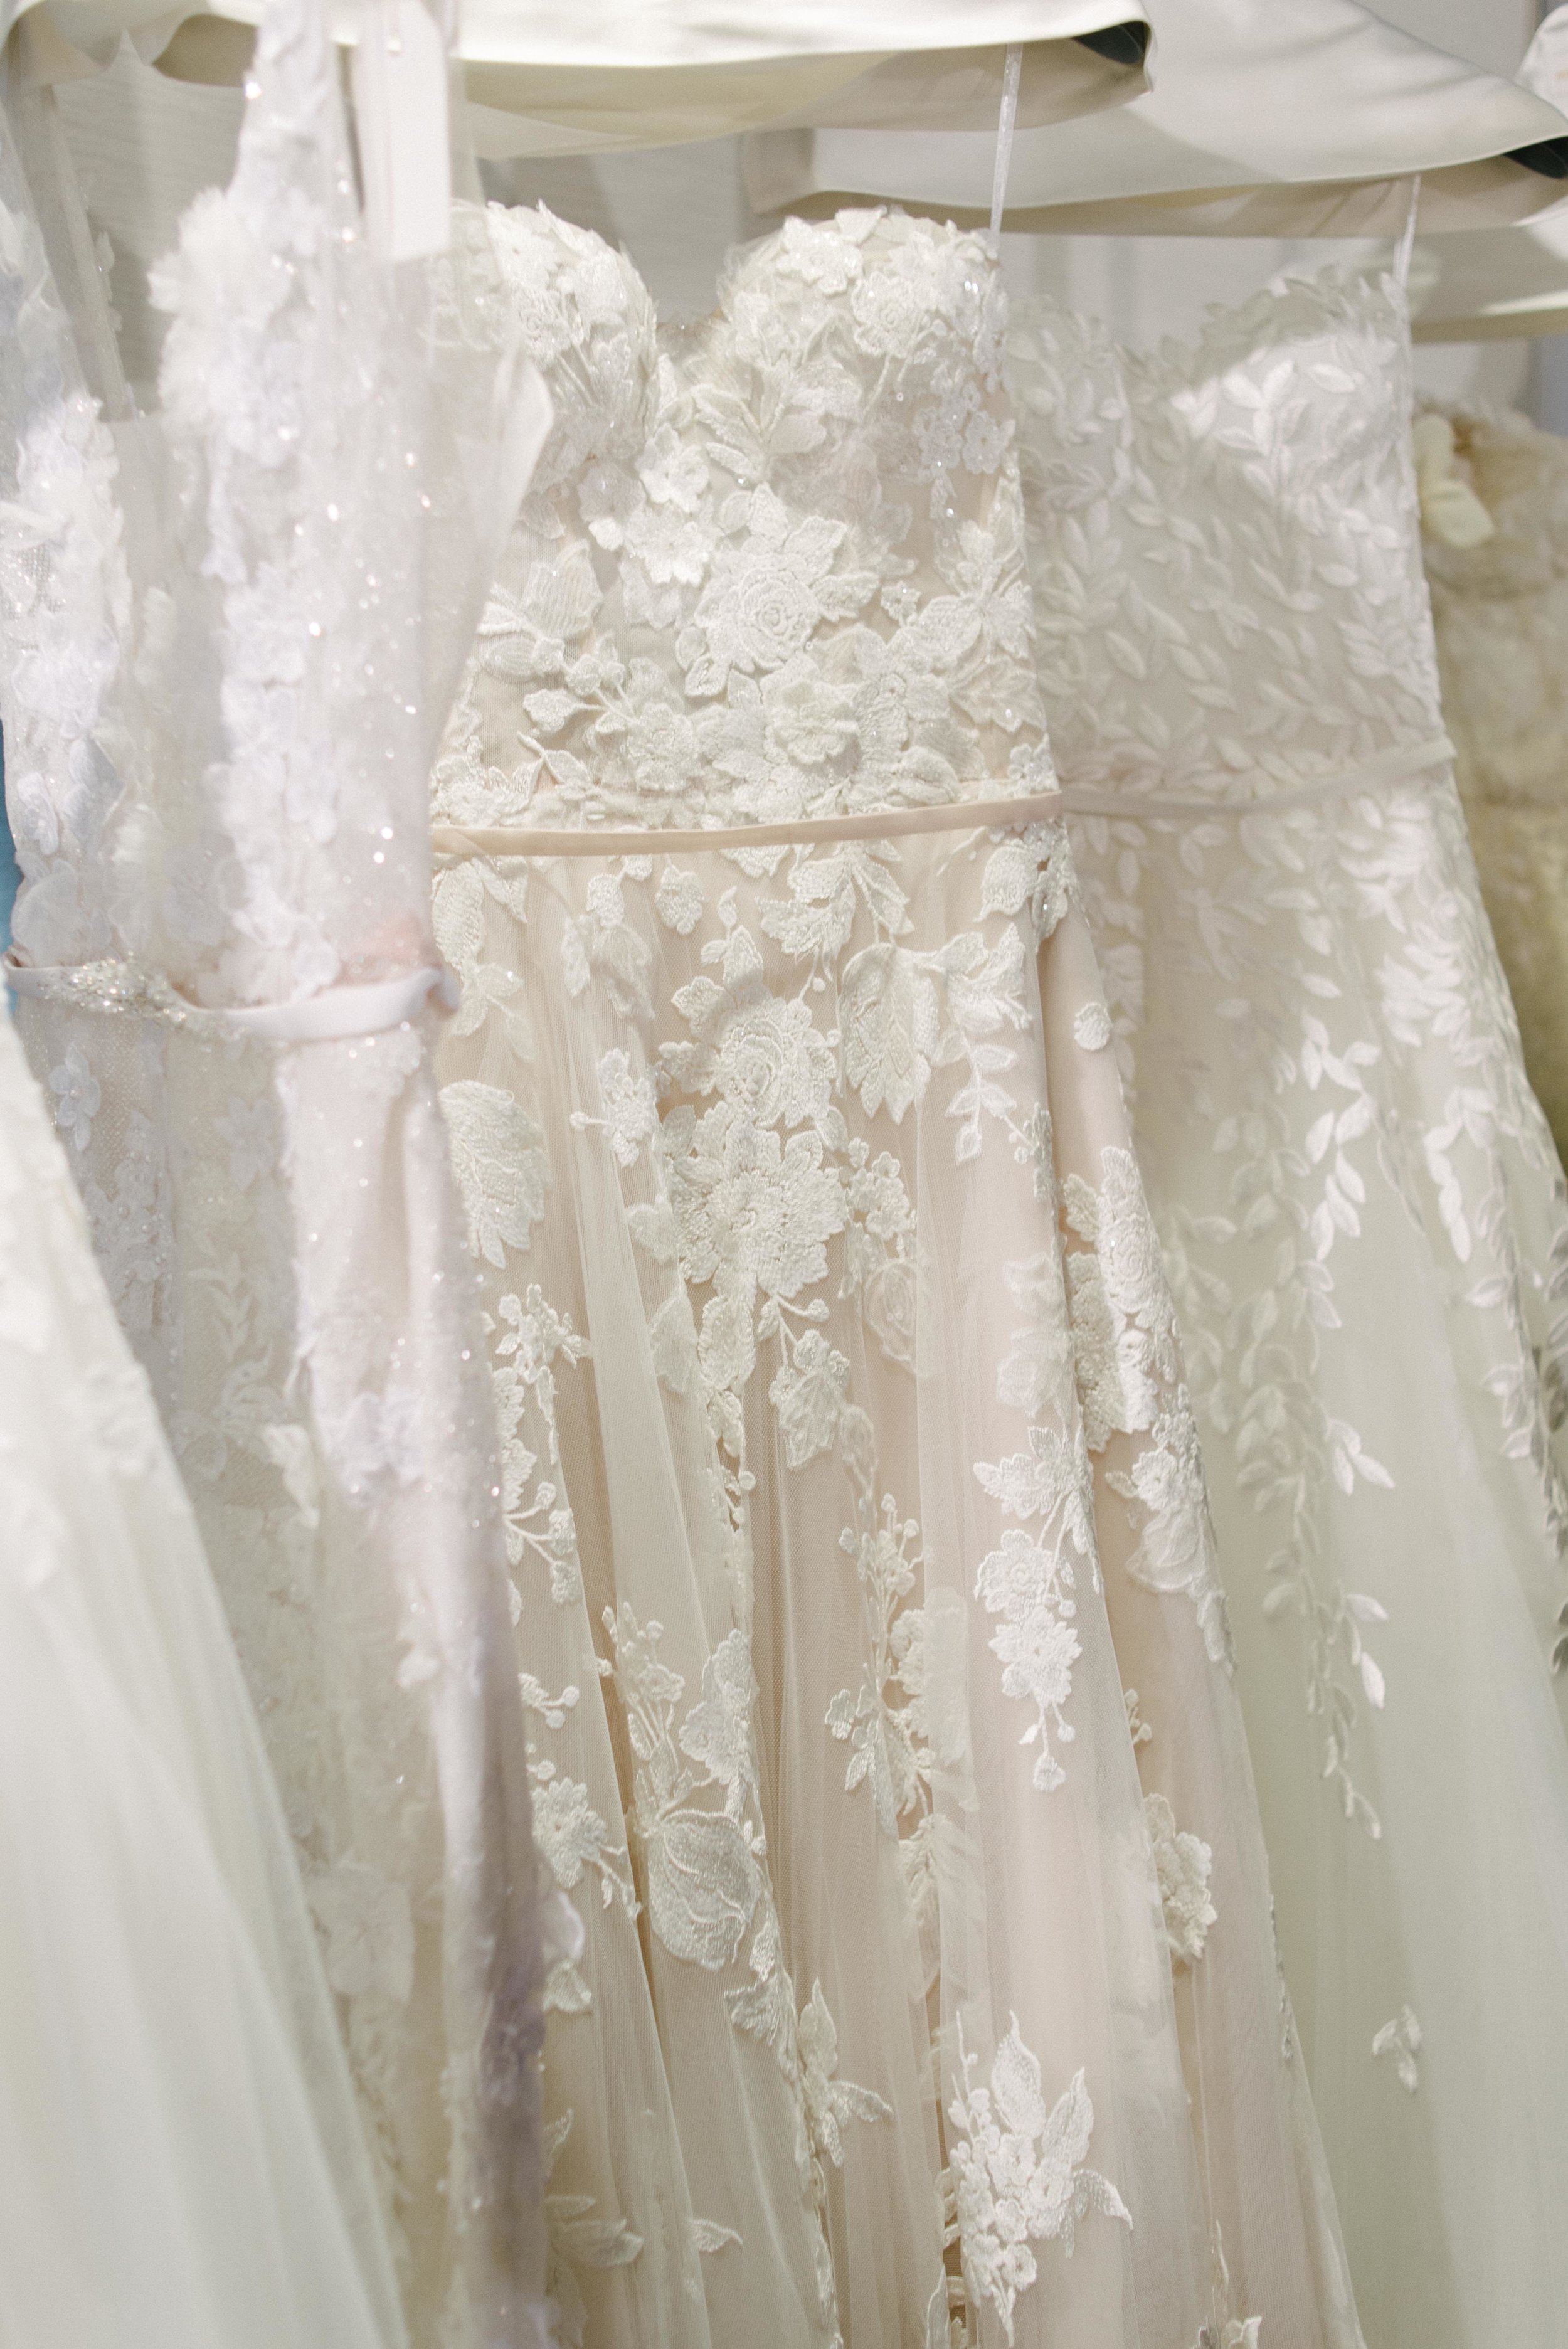 Mira Zwillinger Fall 2019, Bridal Market 2018, Little White Dress Bridal Shop, Denver CO, New York Bridal Fashion Week 2018, Wedding Dress Trends 2019